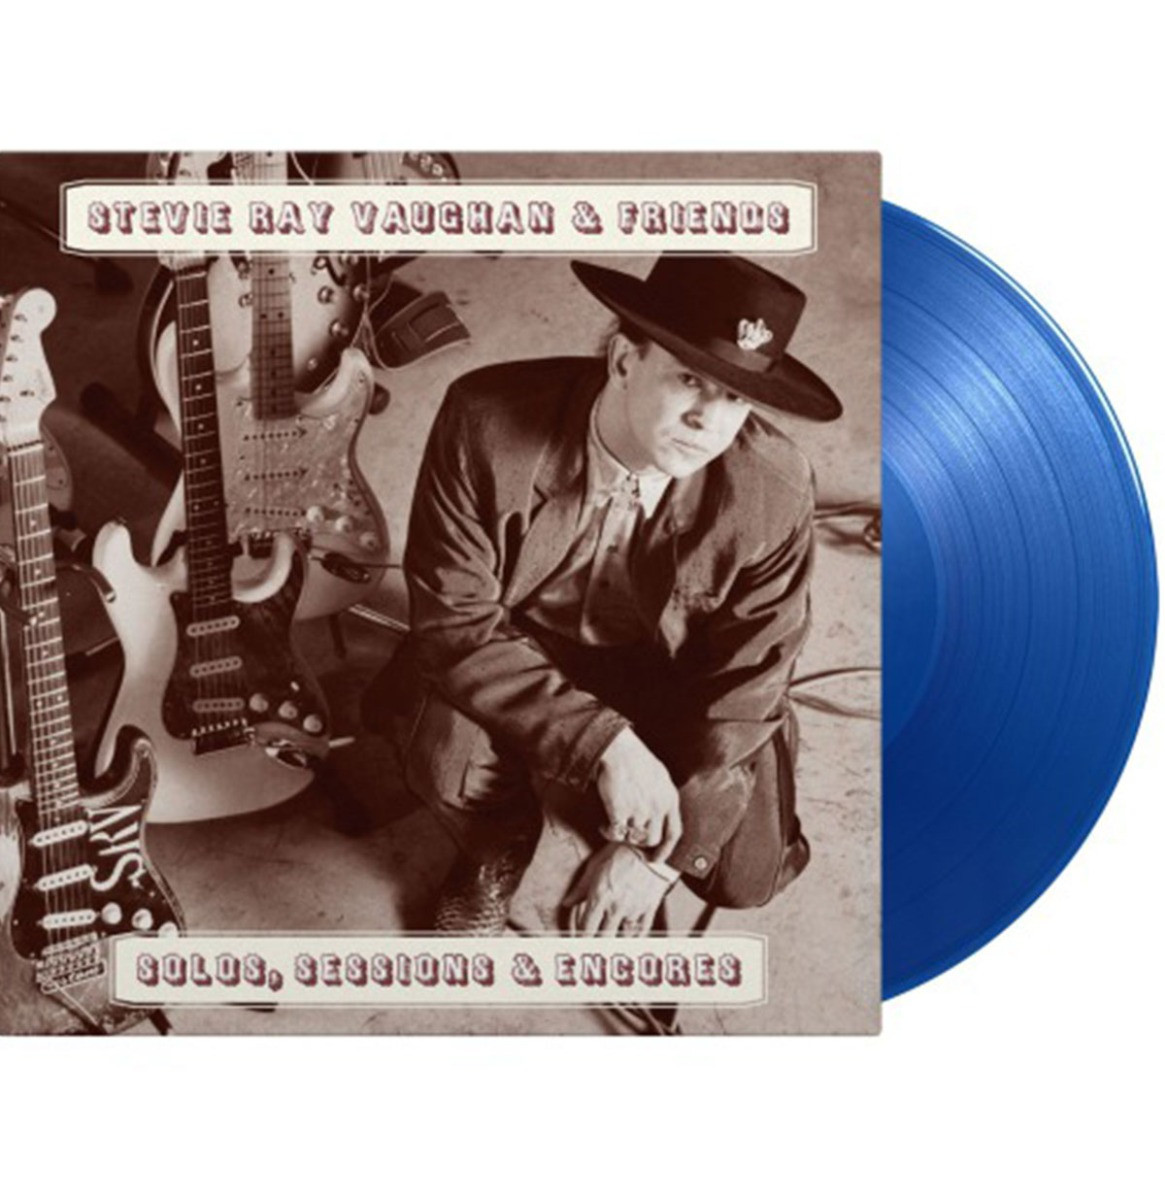 Stevie Ray Vaughan & Friends - Solos, Sessions & Encores (Gekleurd Vinyl) 2LP